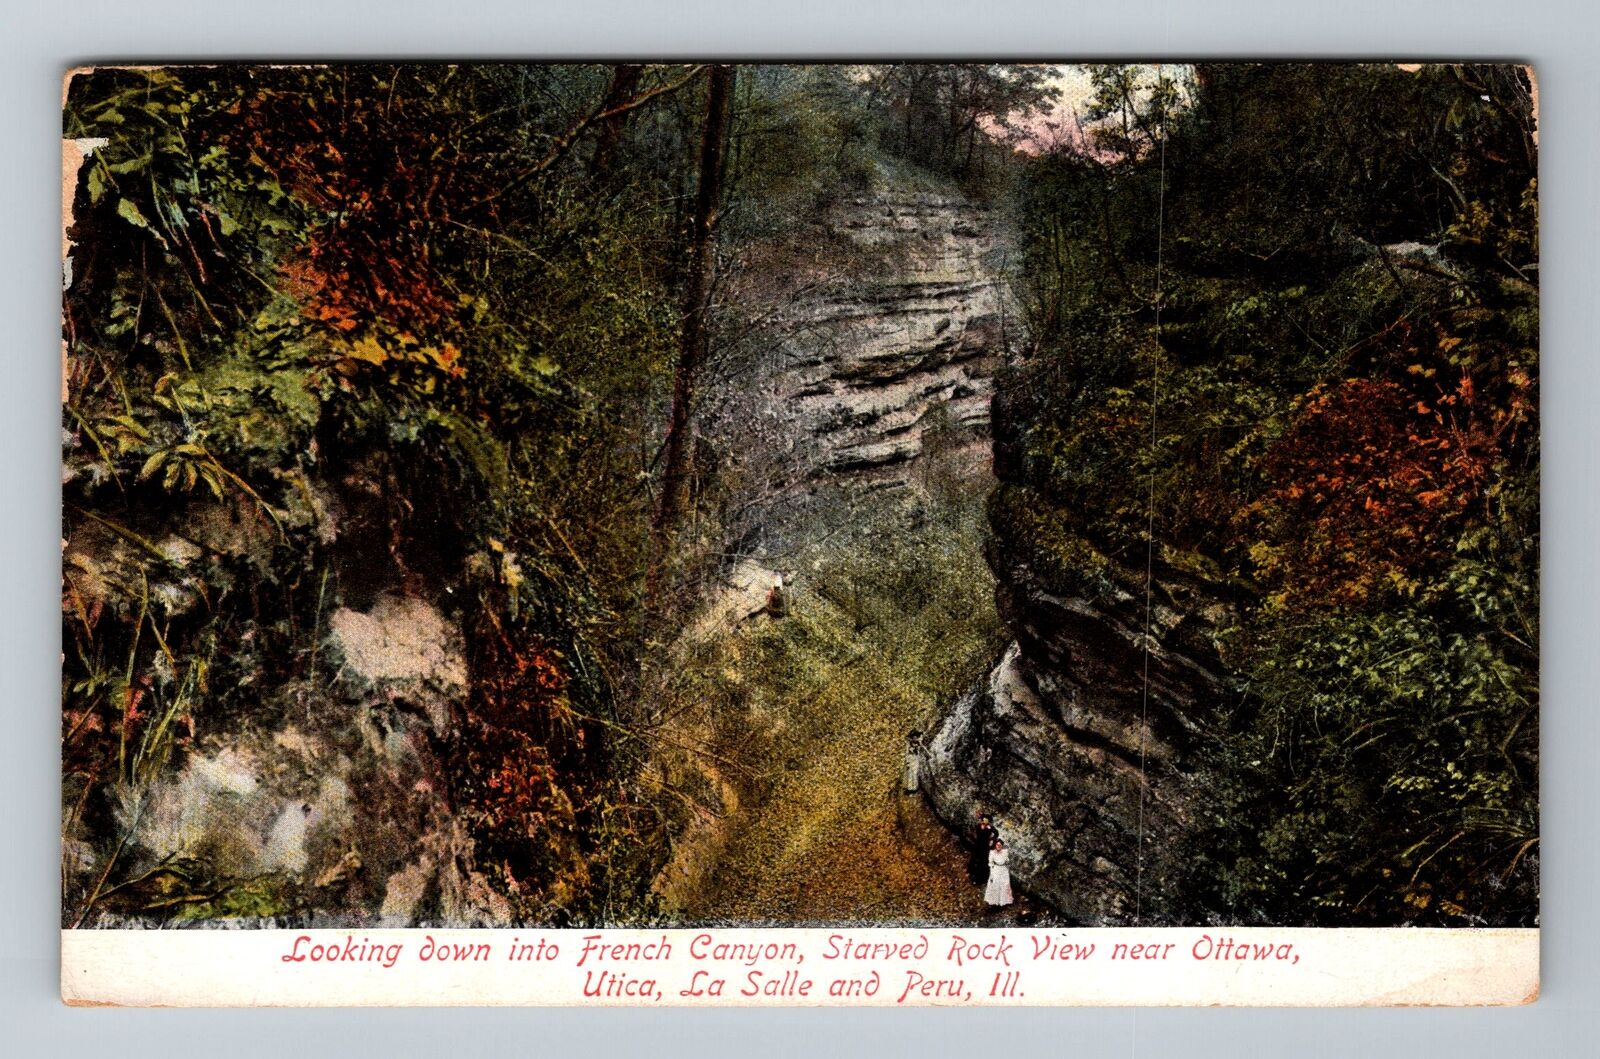 Ottawa IL-Illinois, French Canyon, Starved Rock Vintage Souvenir Postcard